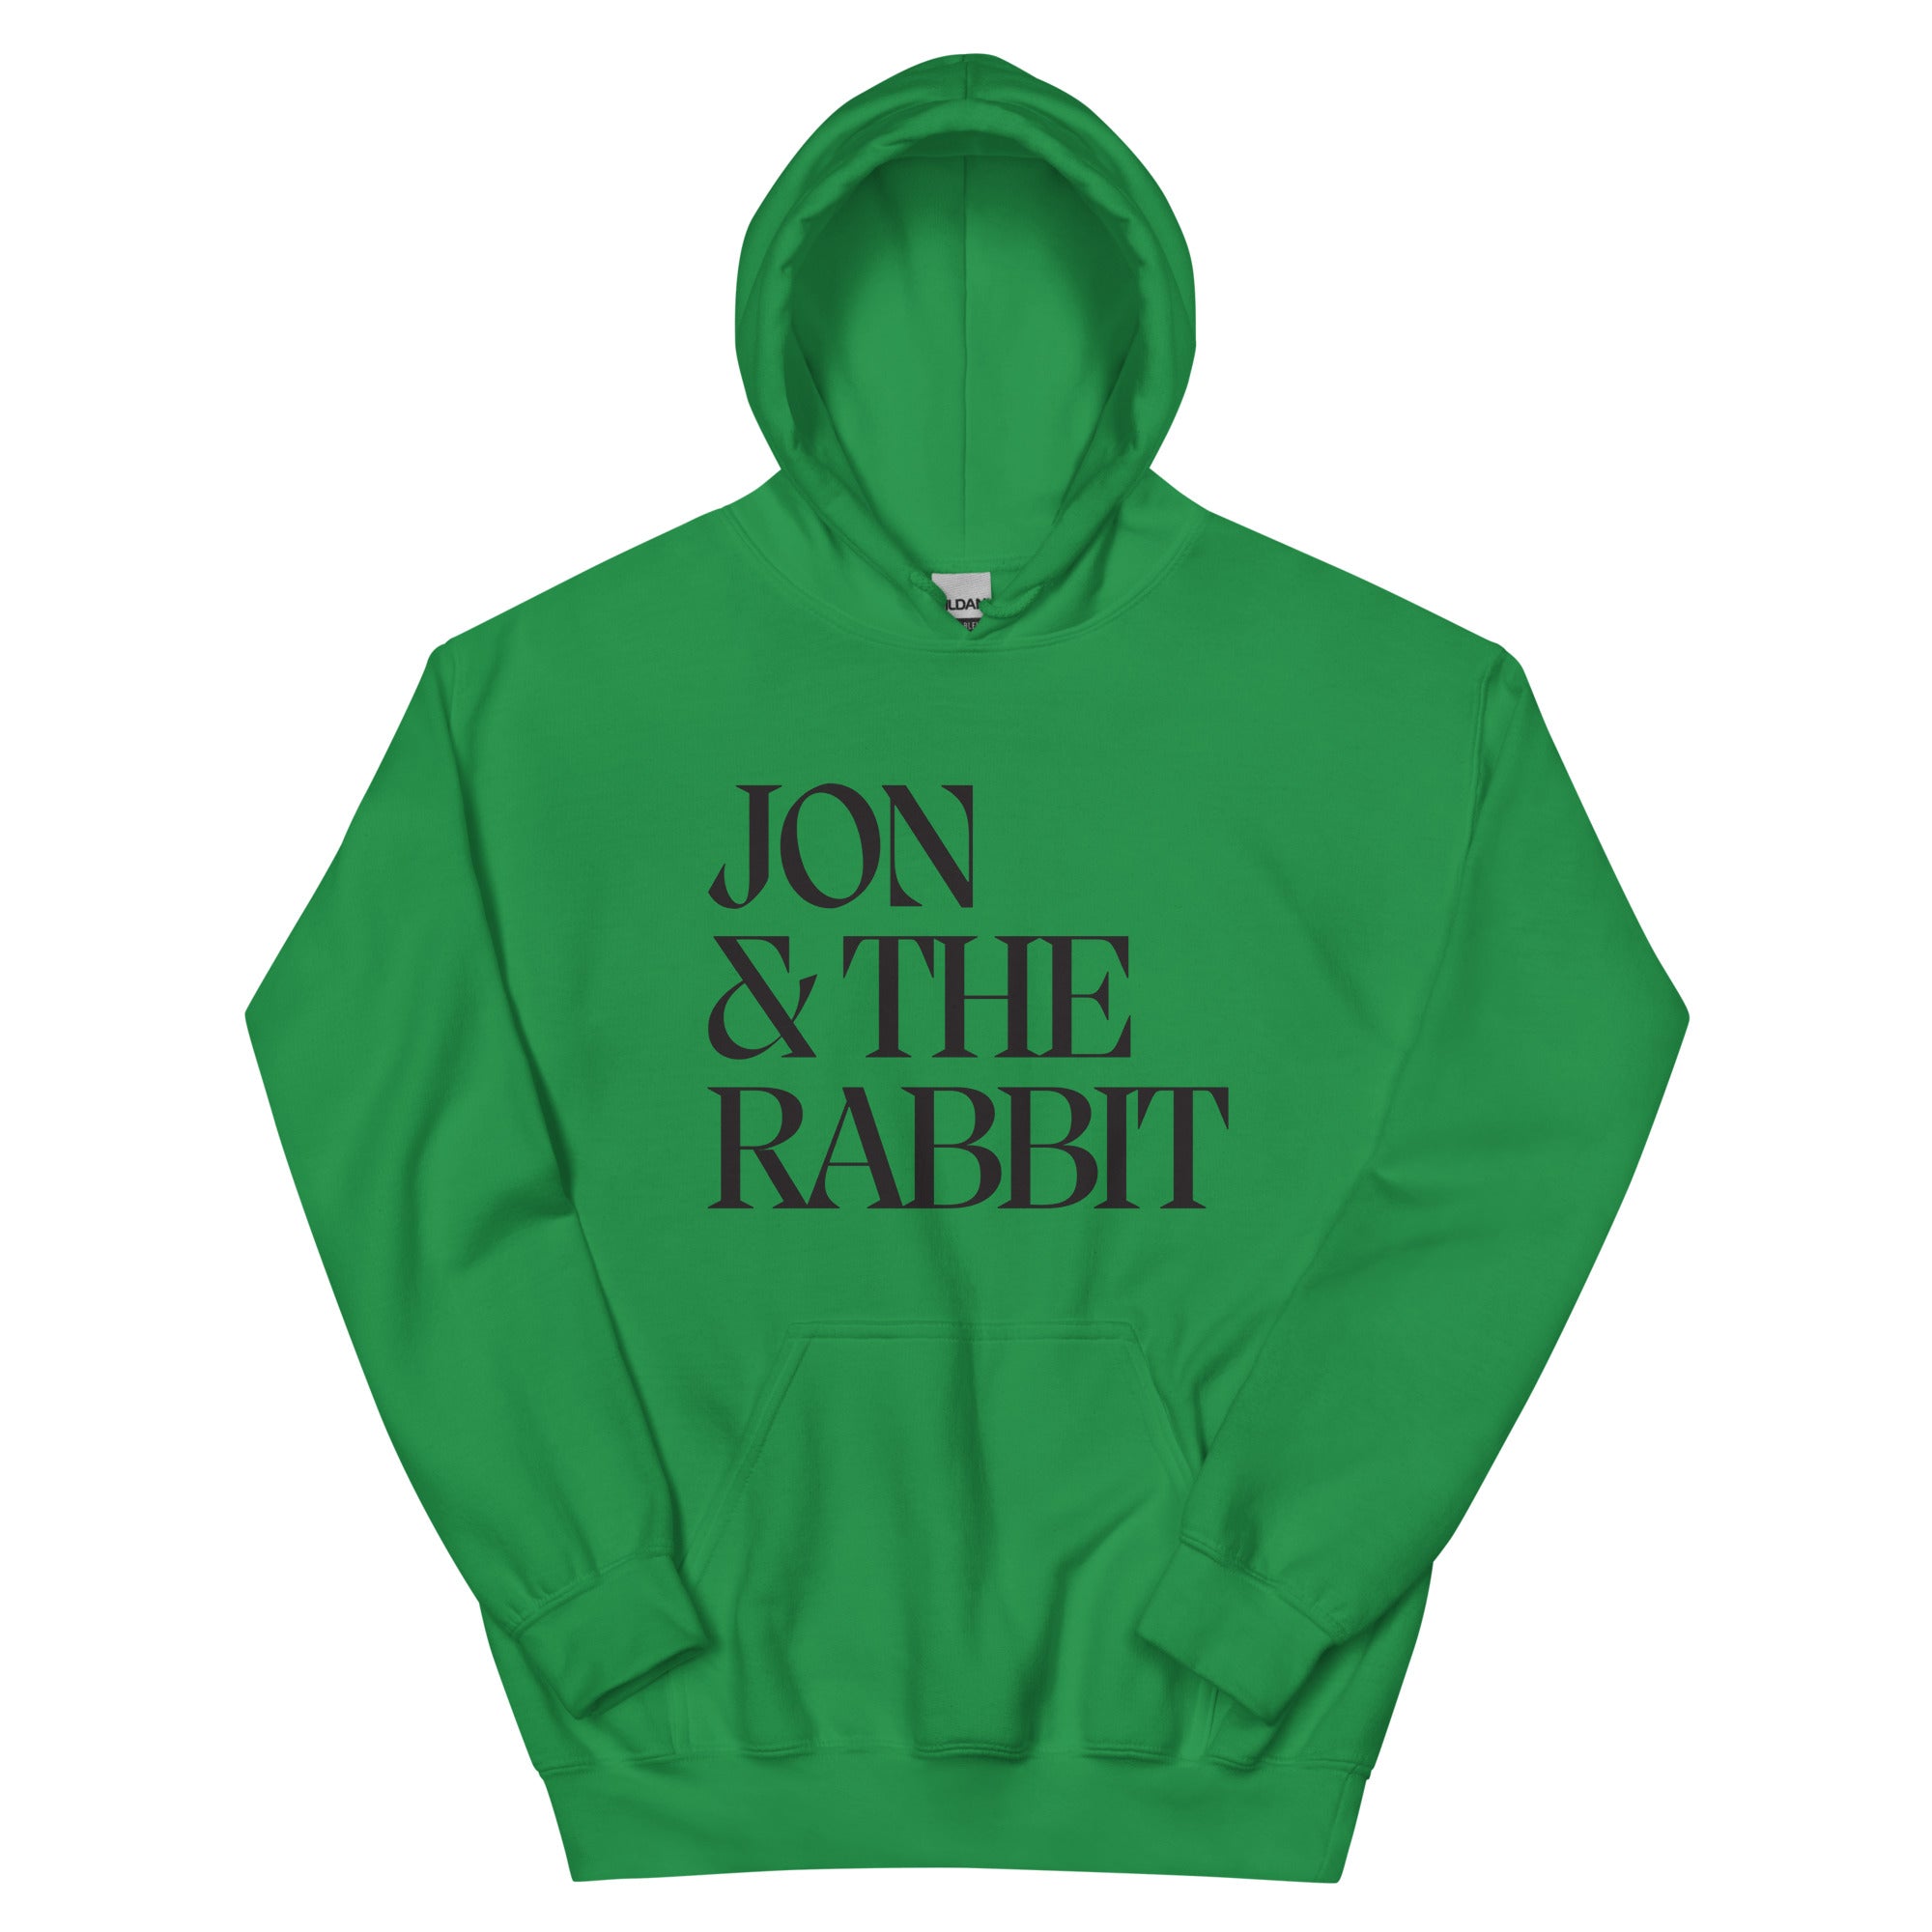 Jon & The Rabbit - Unisex Hoodie